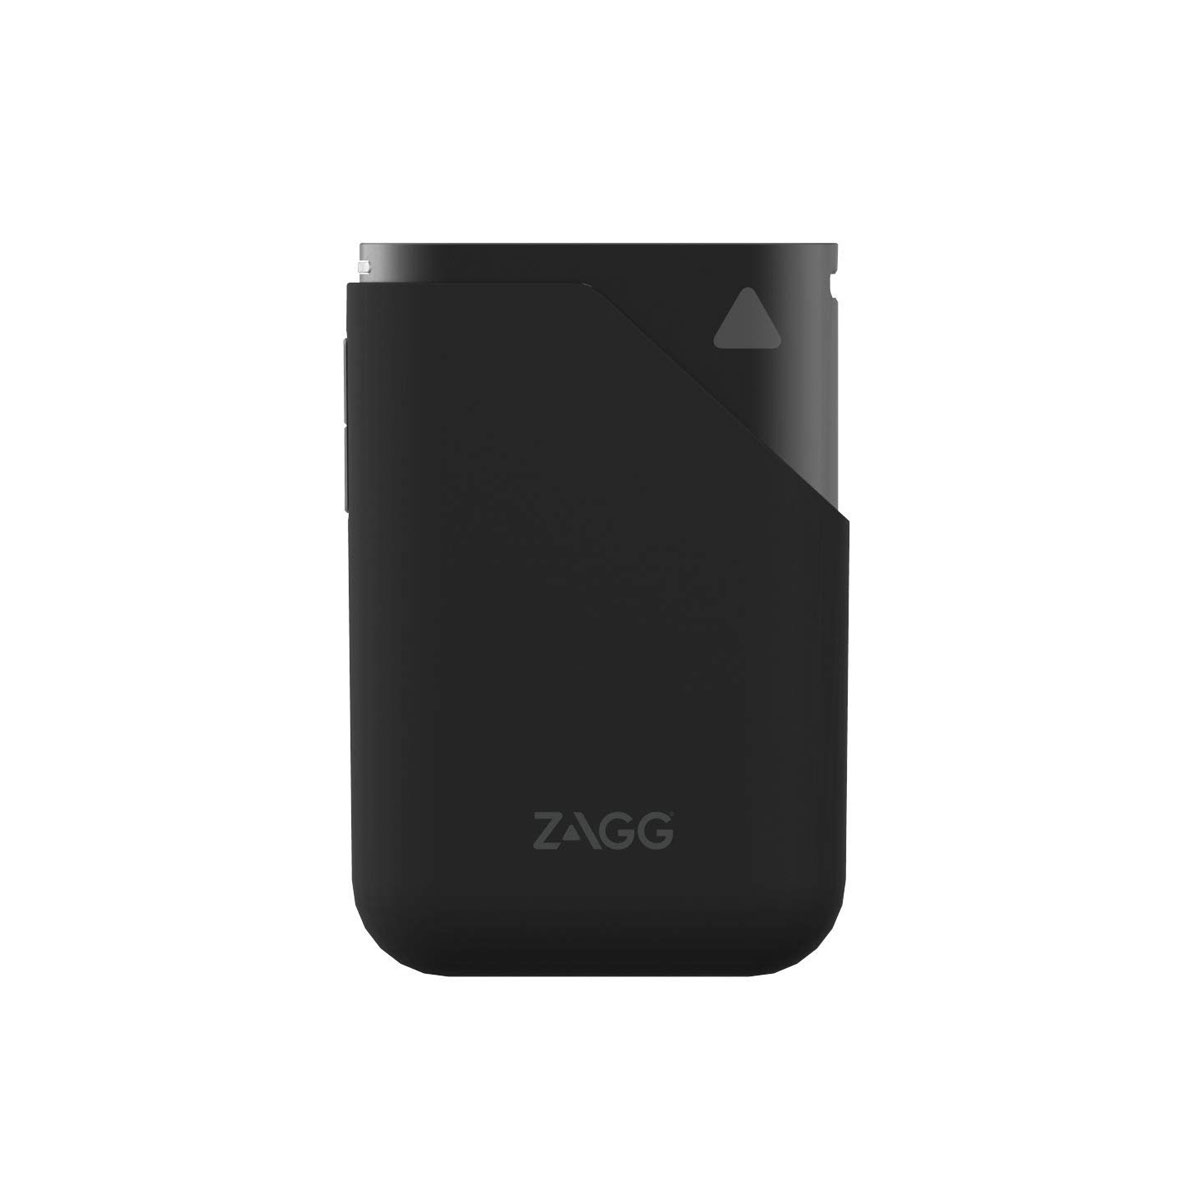 Zagg Power-Amp 6 Powerbank 6K mAh - Black